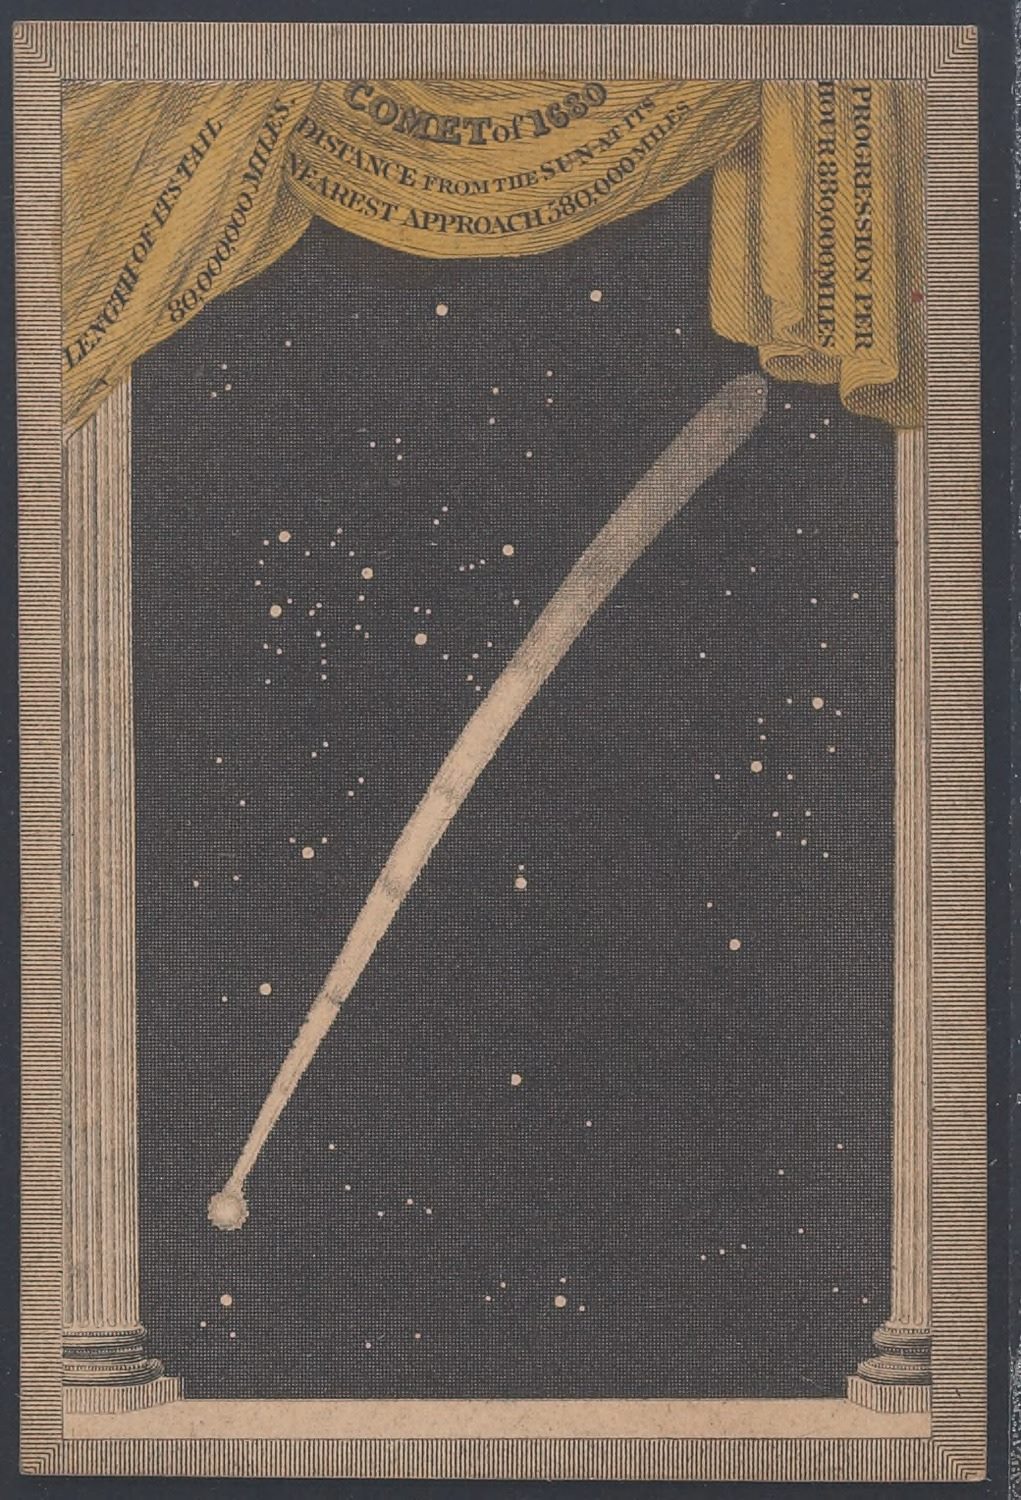 The Comet of 1680 (Autumn)